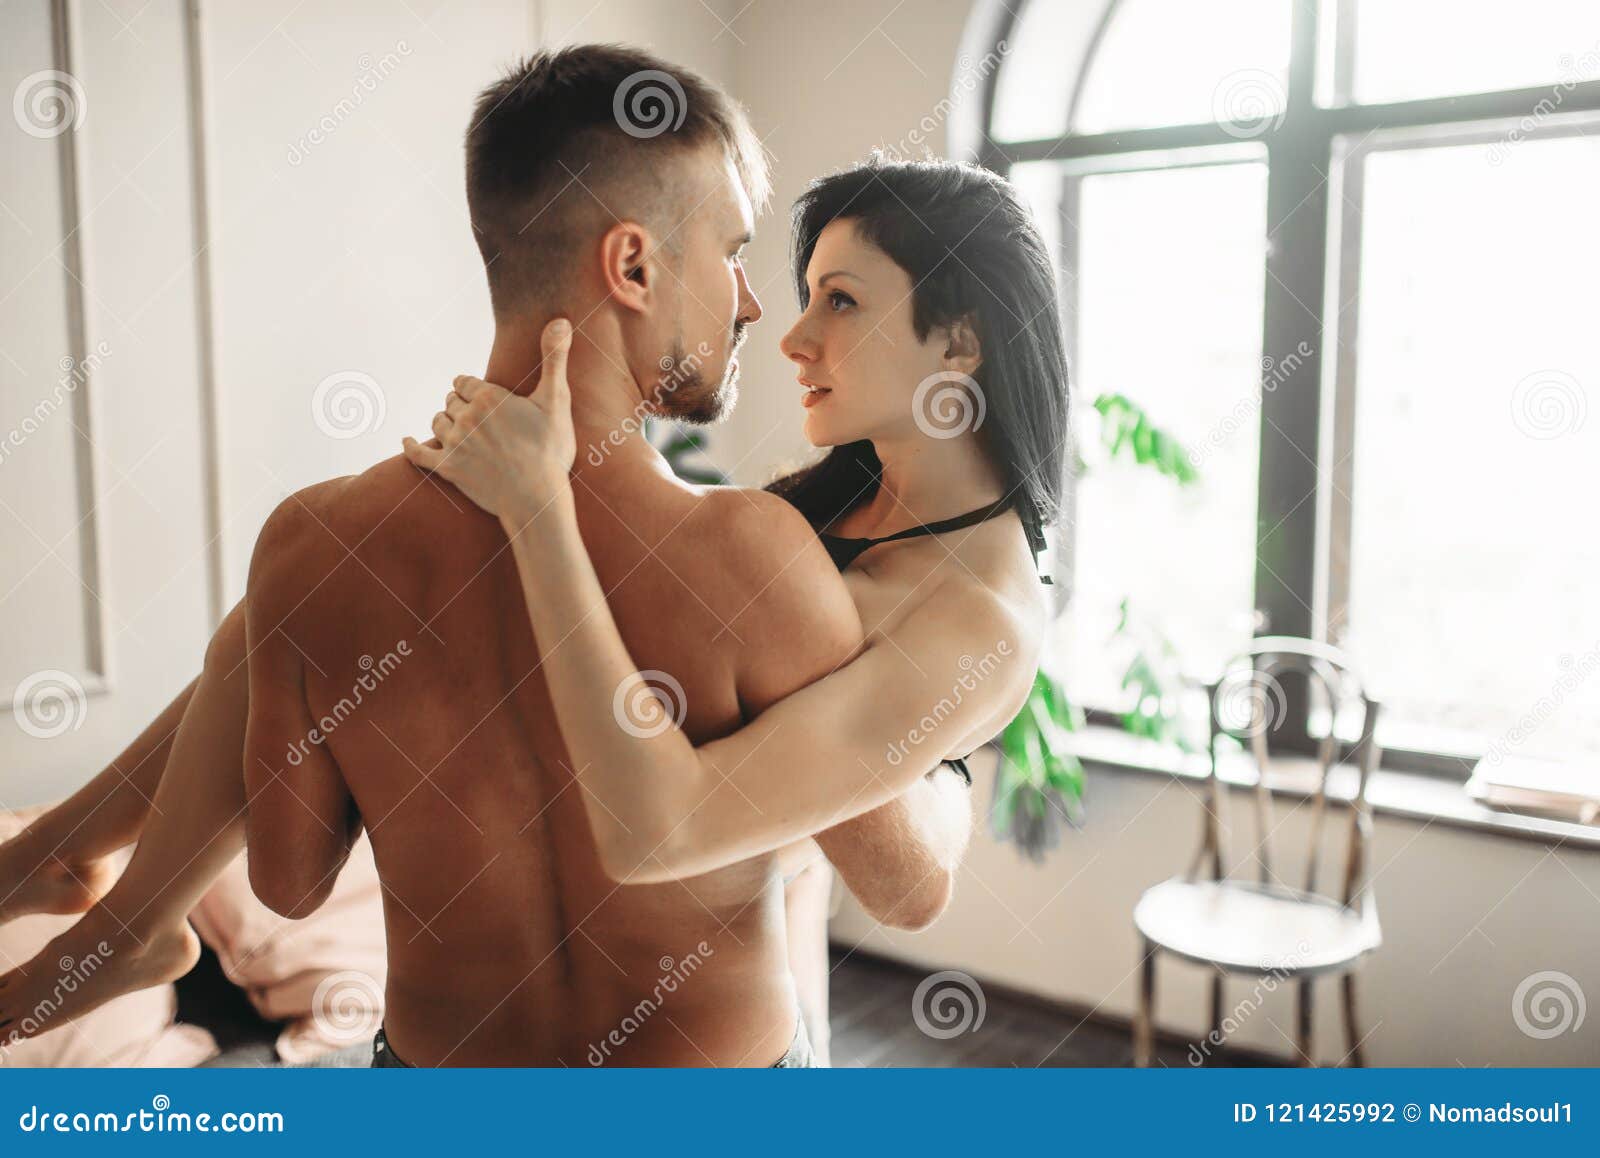 ashley cassandra johnston add photo naked sexual men